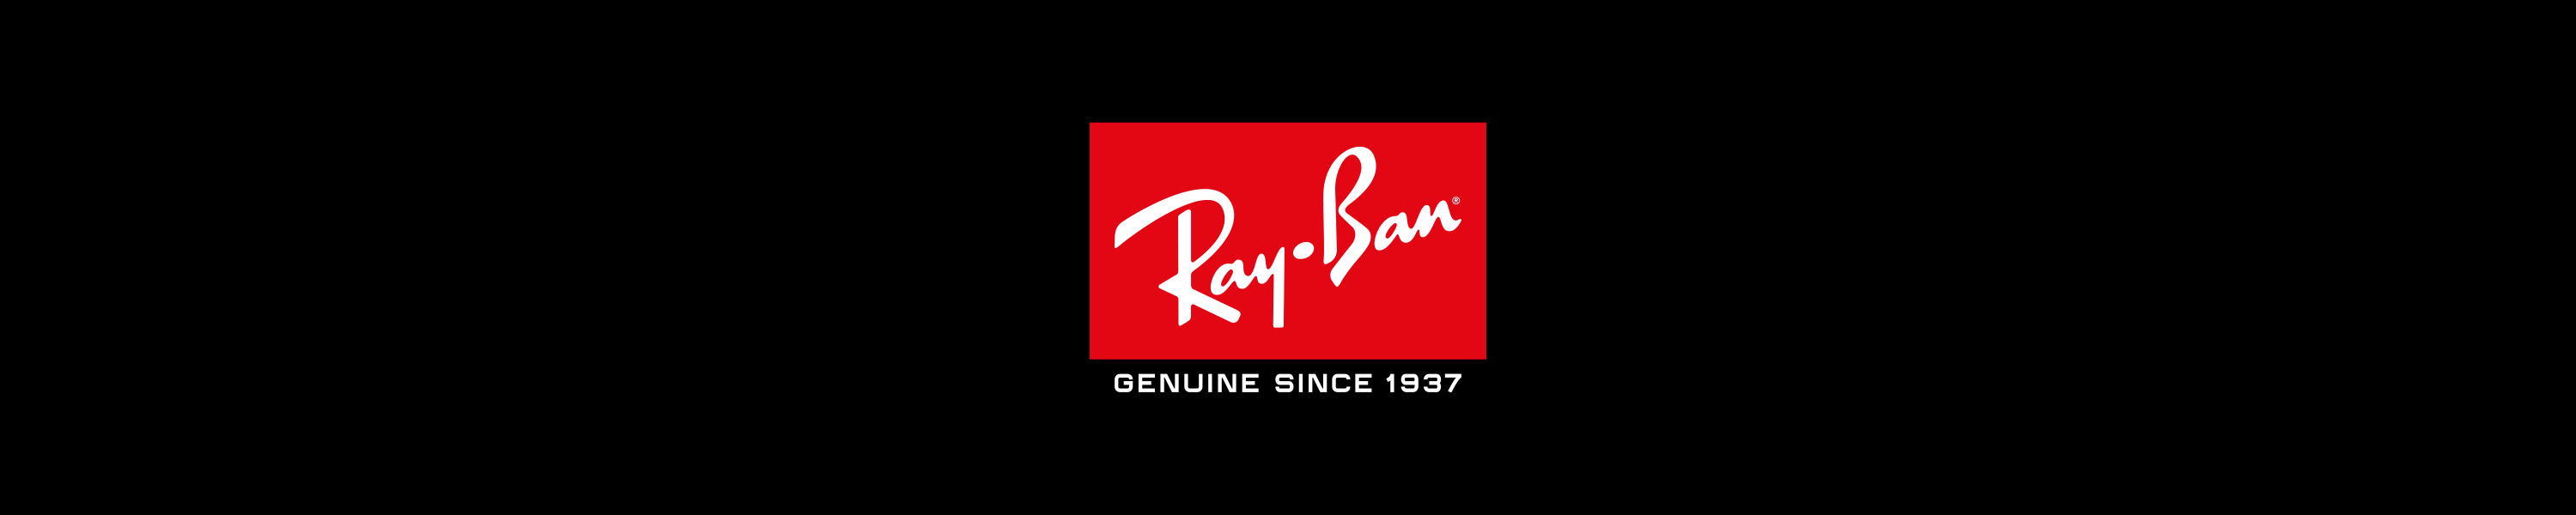 Rayban Banner